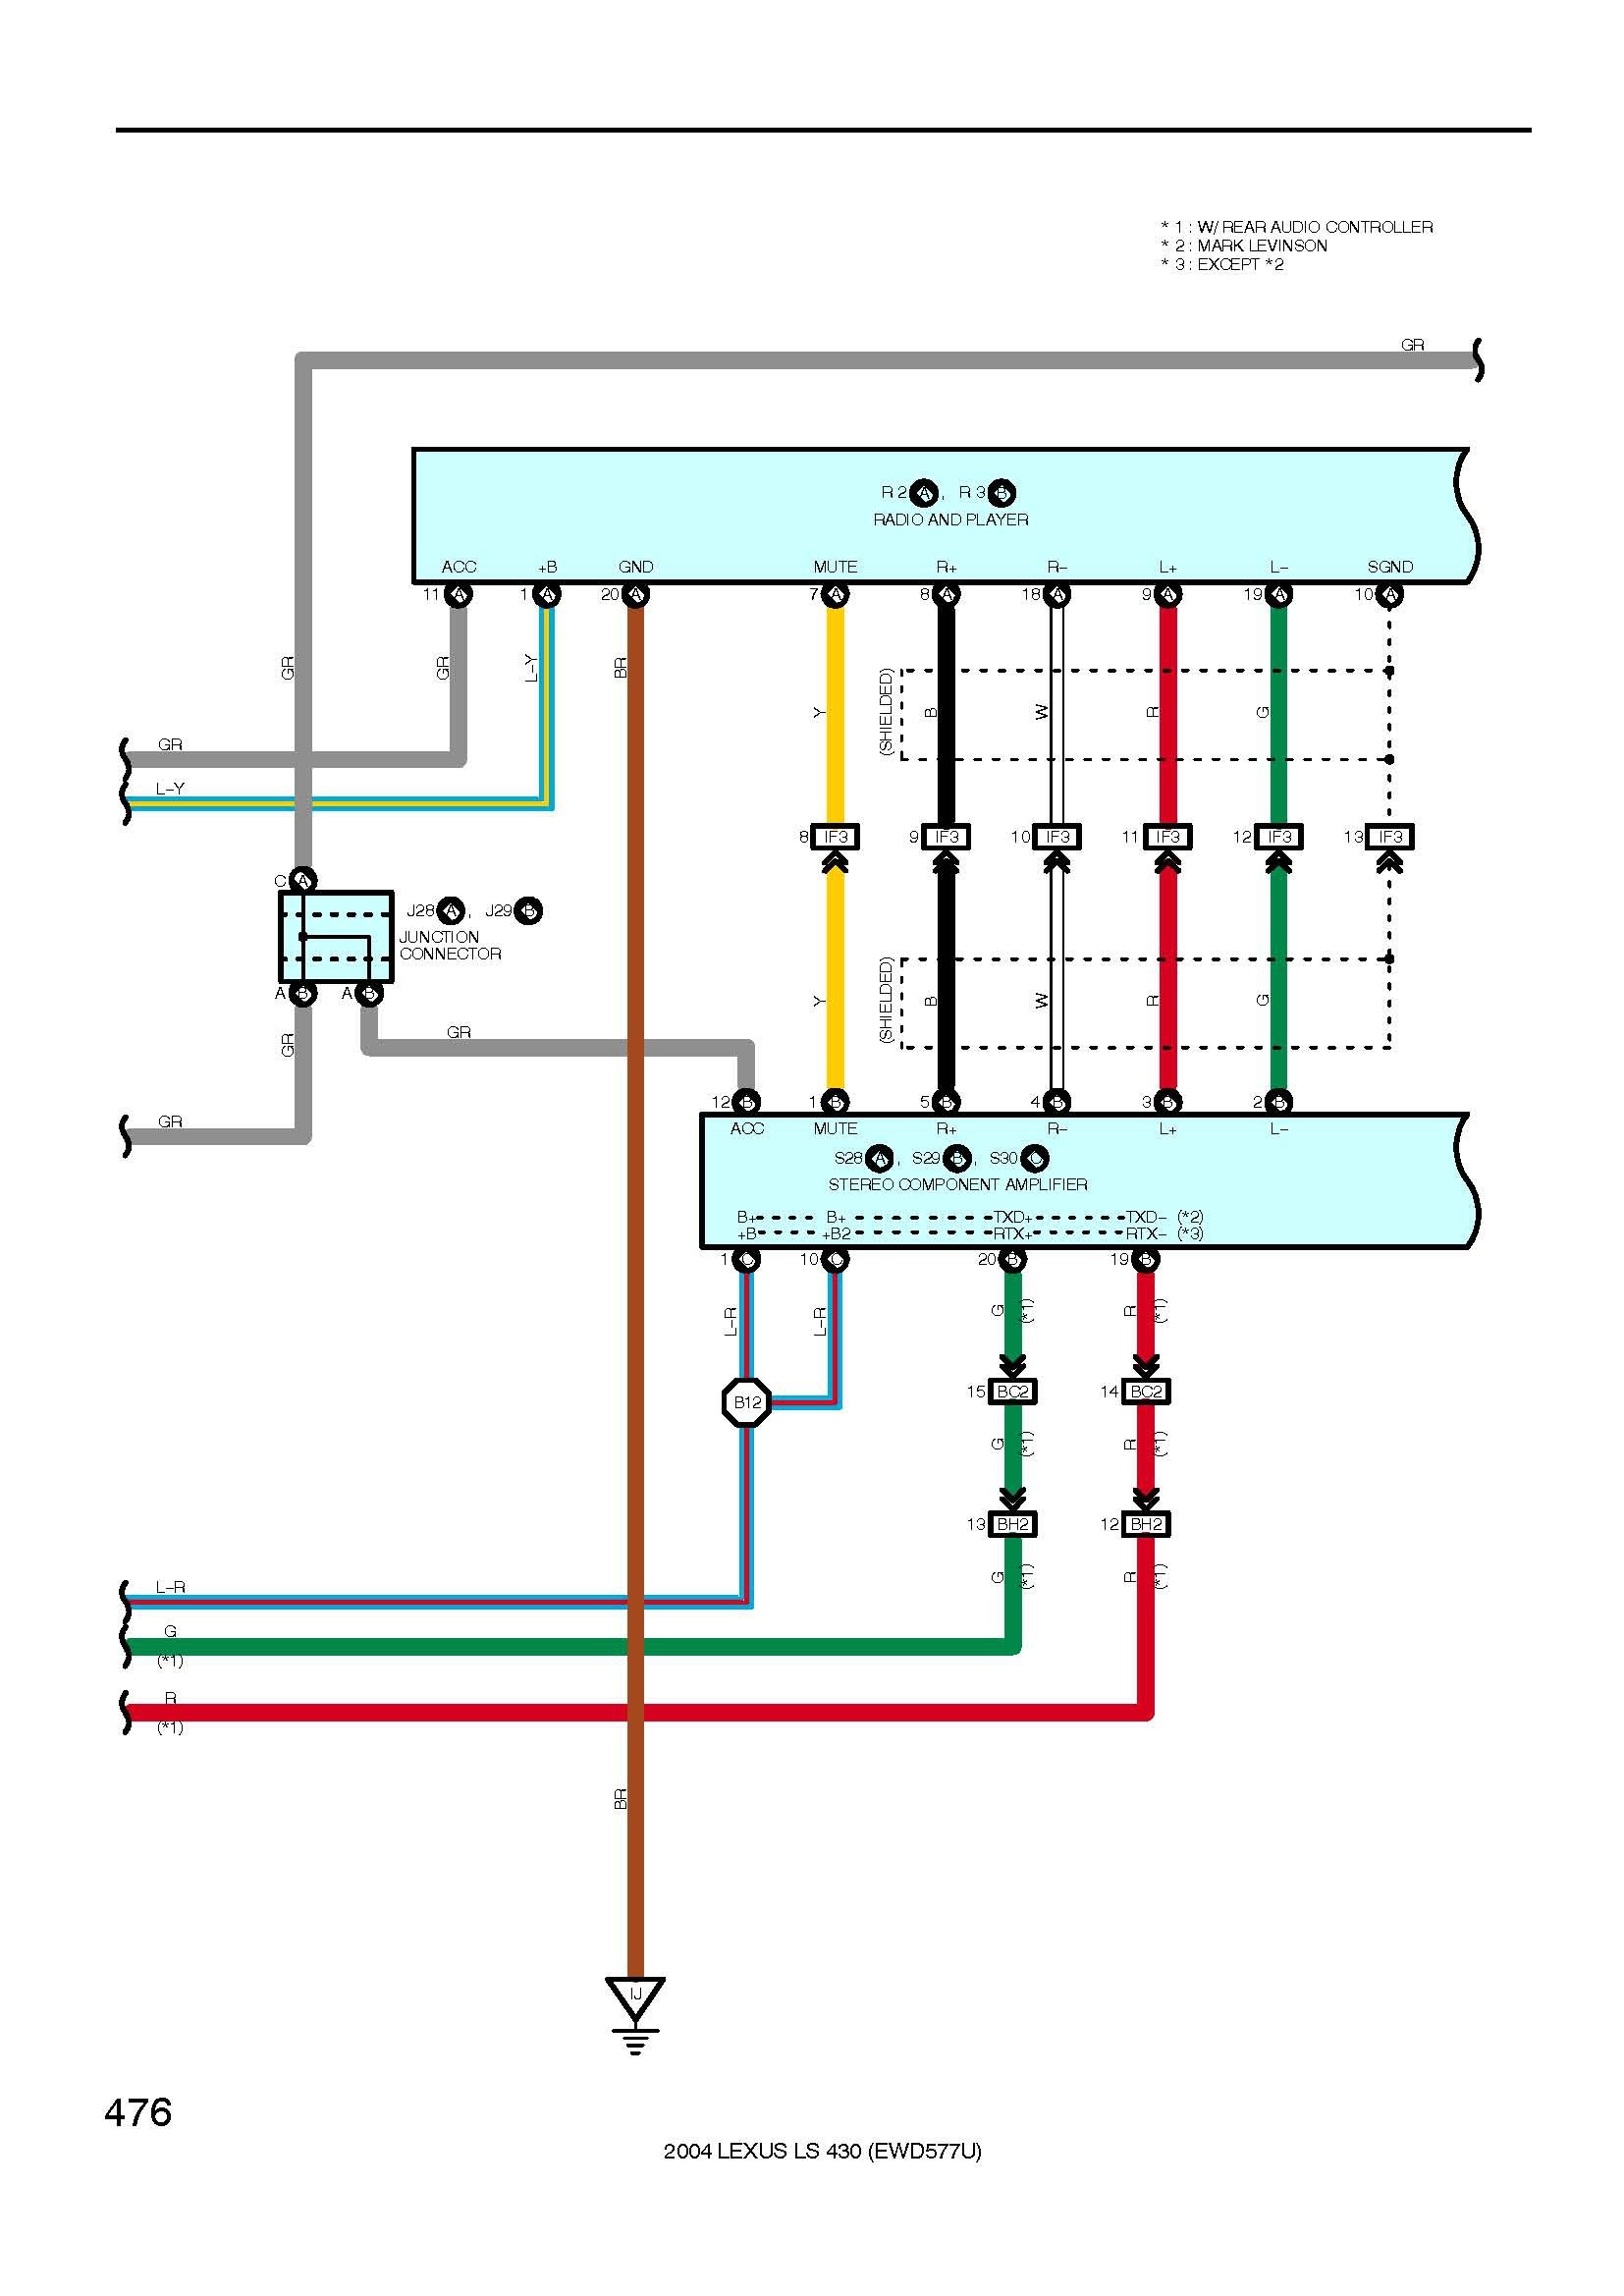 House Wiring Diagram Luxury Amp Wiring Diagram Diagram Of House Wiring Diagram